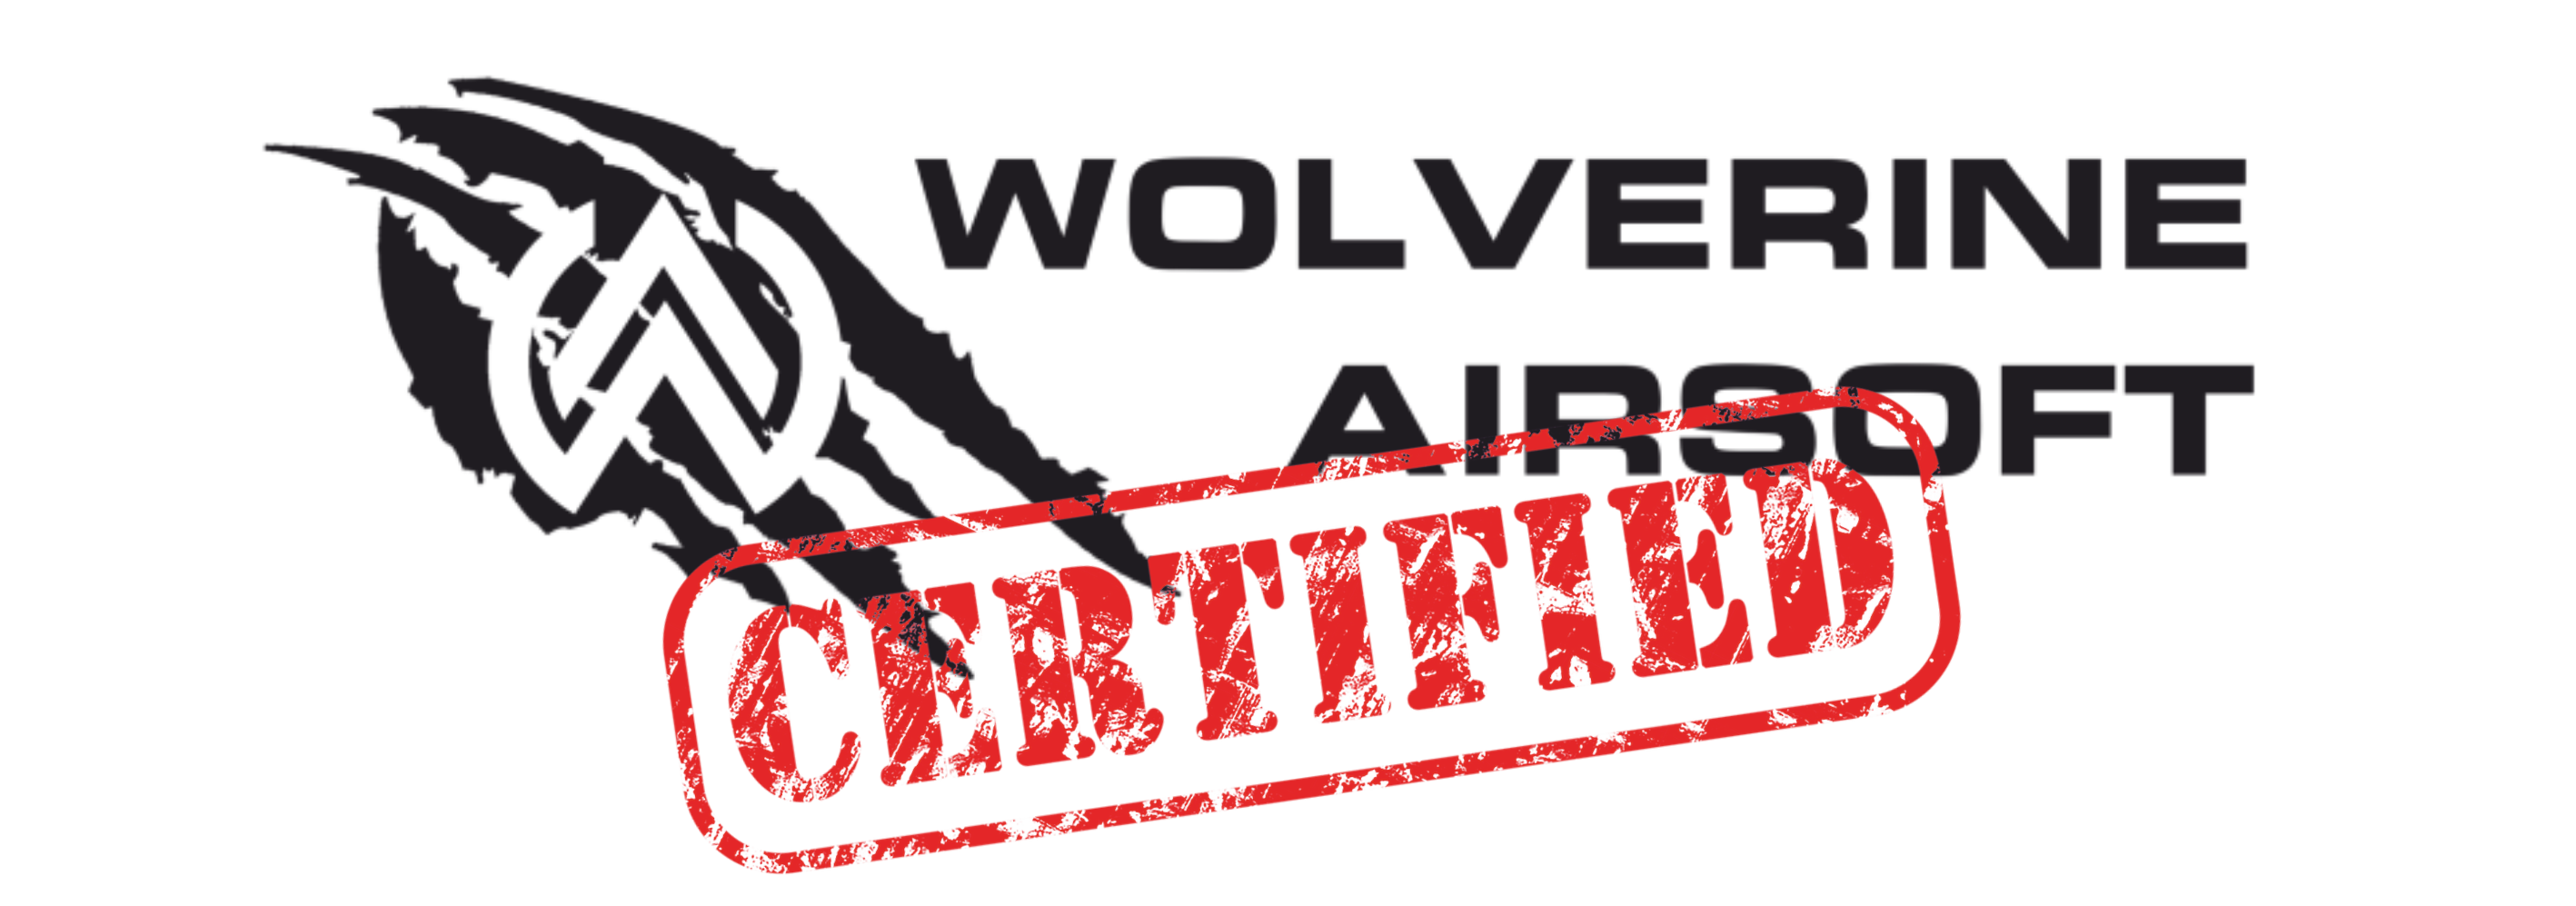 Wolverine-Certified